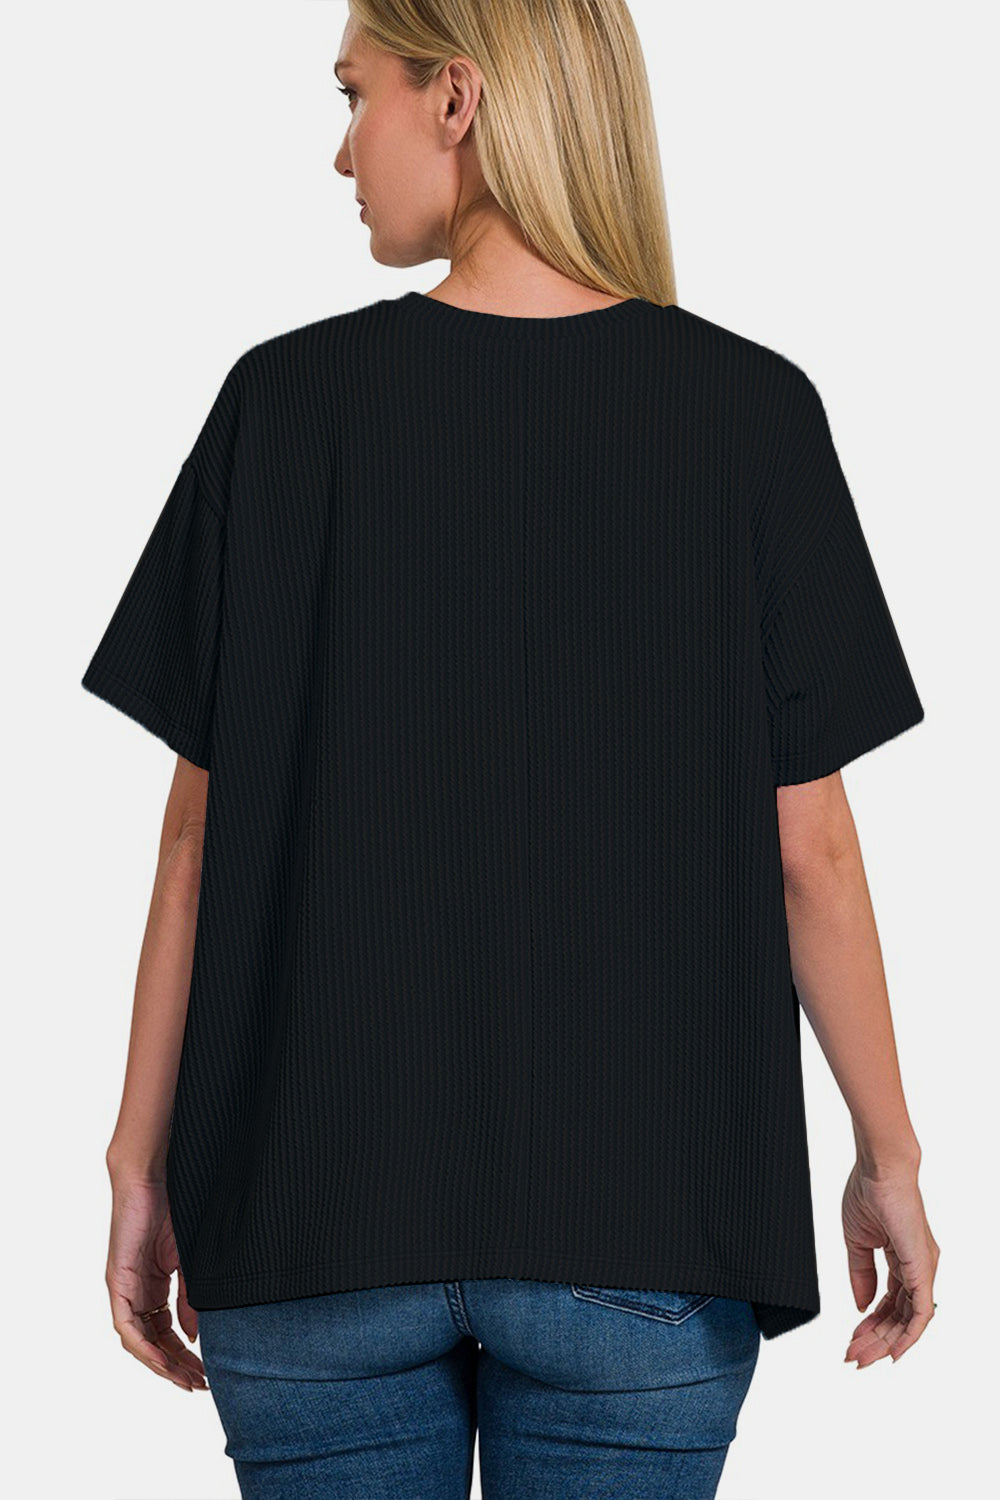 Zenana Black Ribbed Short Sleeve Front Pocket T-Shirt Trendsi